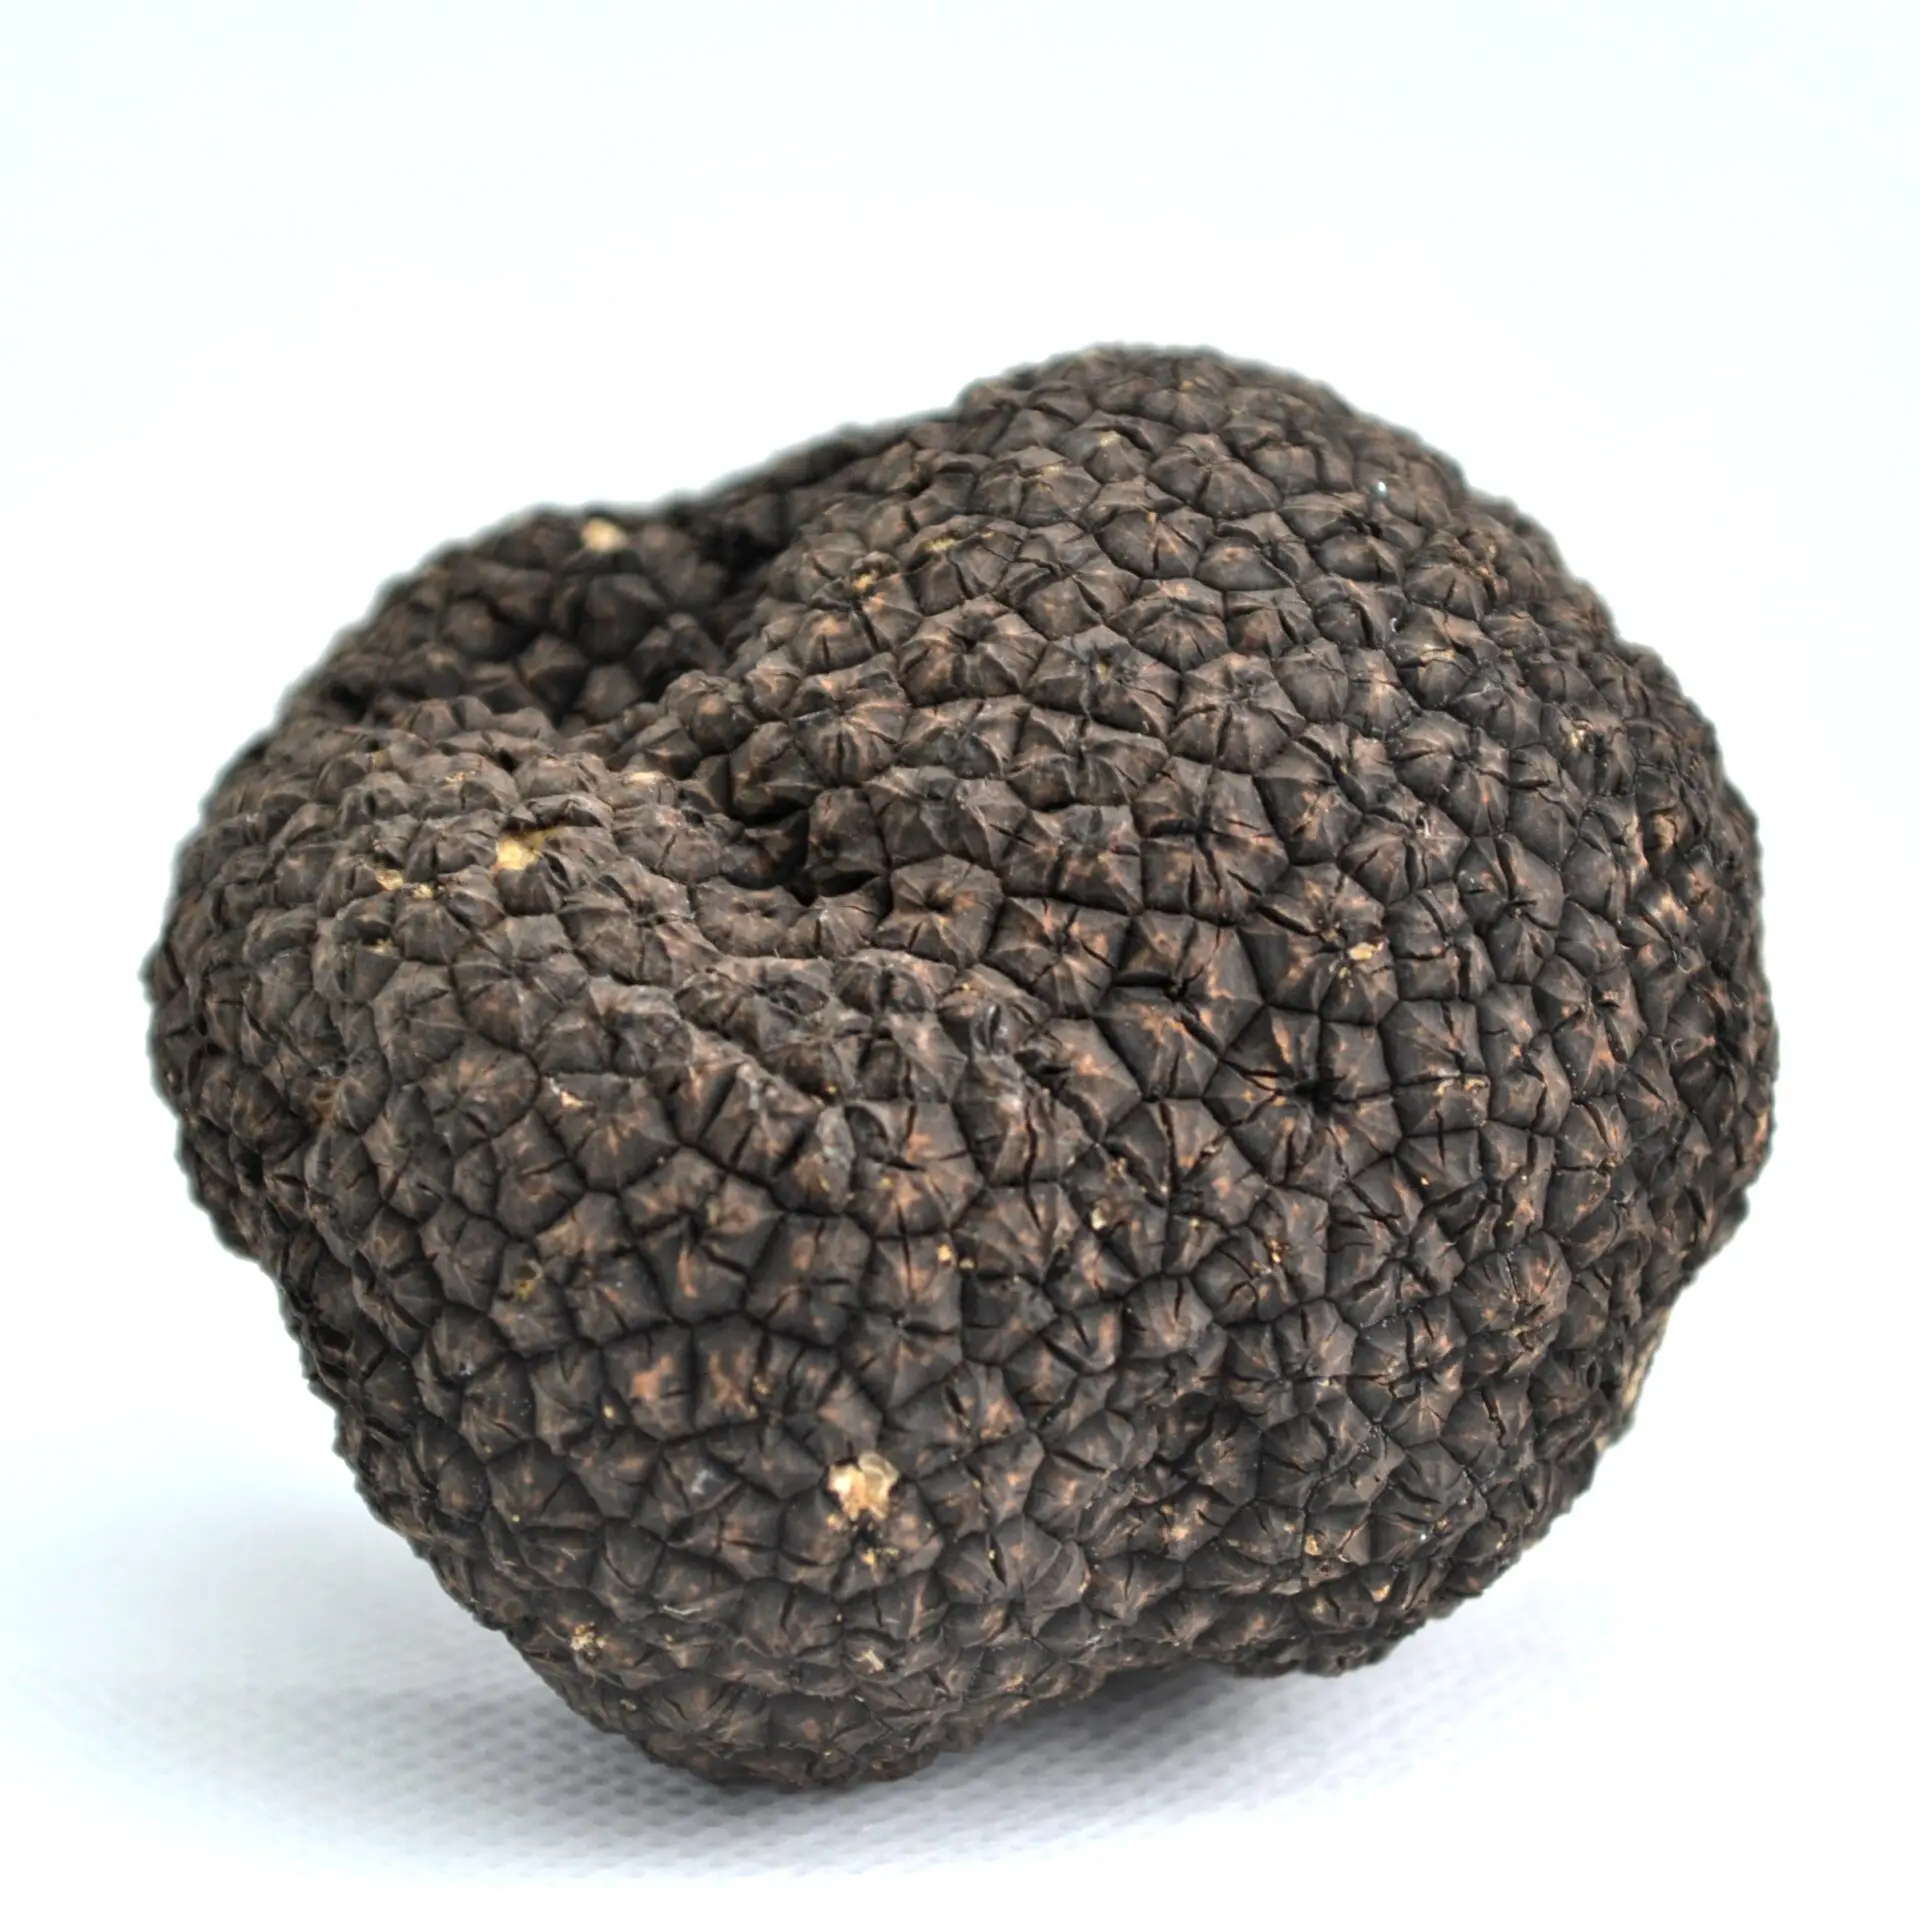 buy Black truffles buy truffle uk